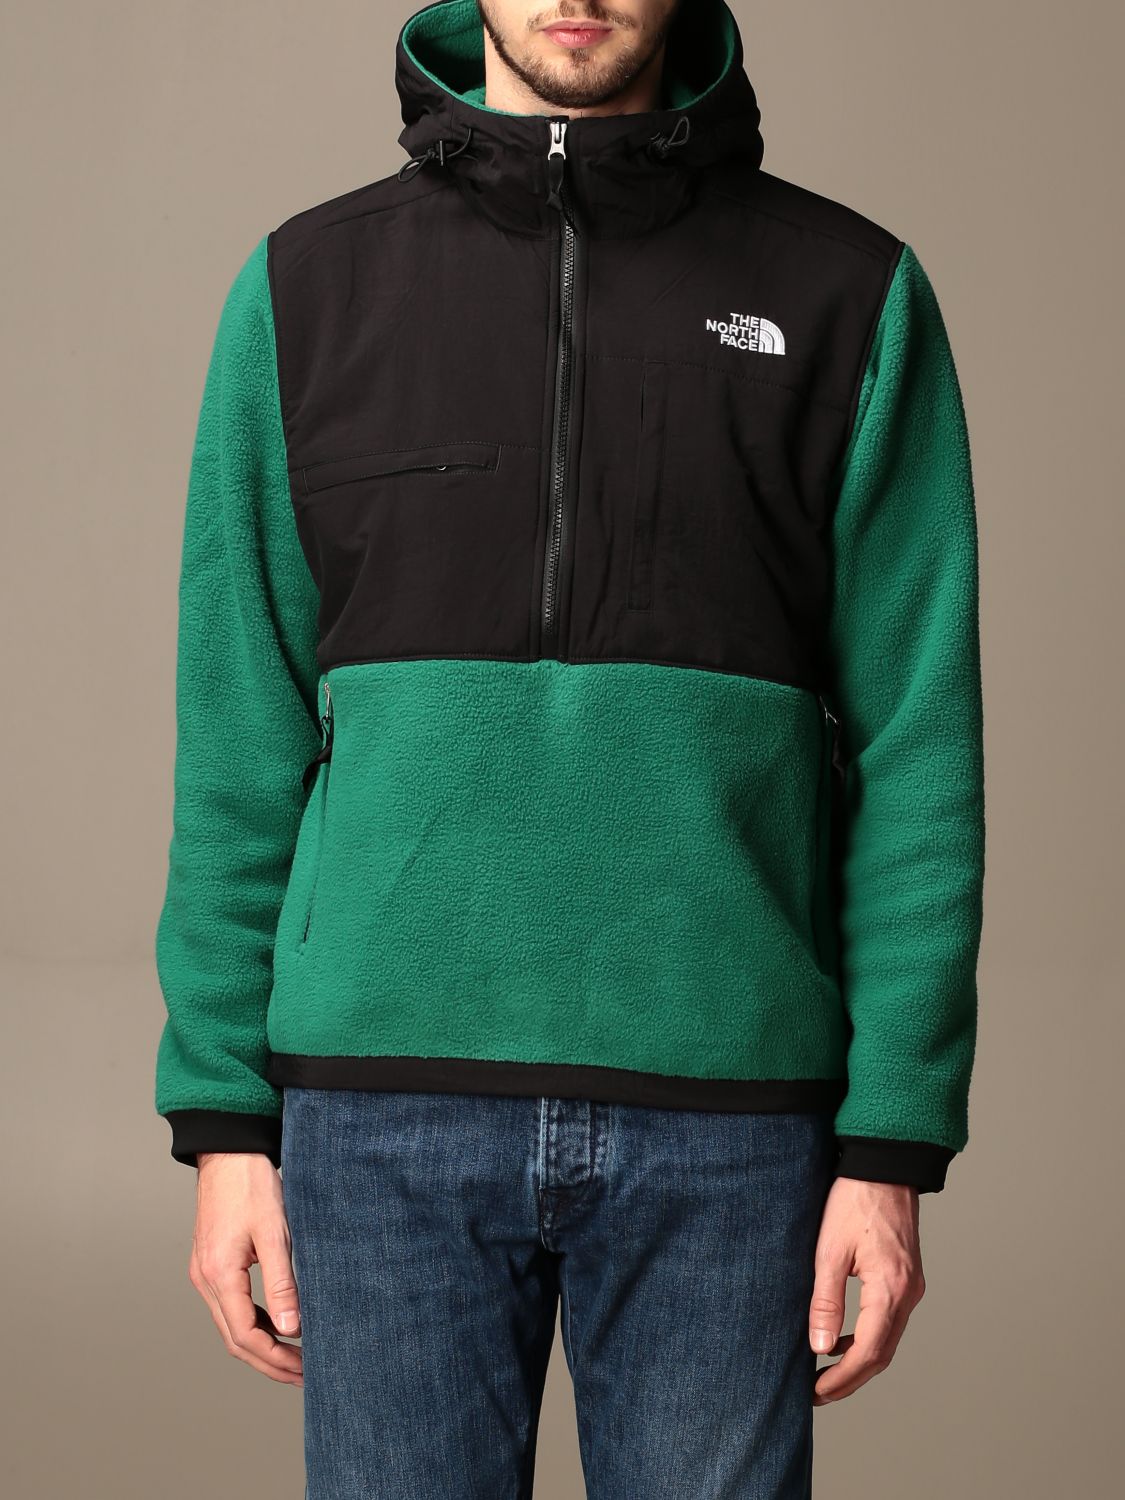 Face sweatshirt in fleece and nylon 